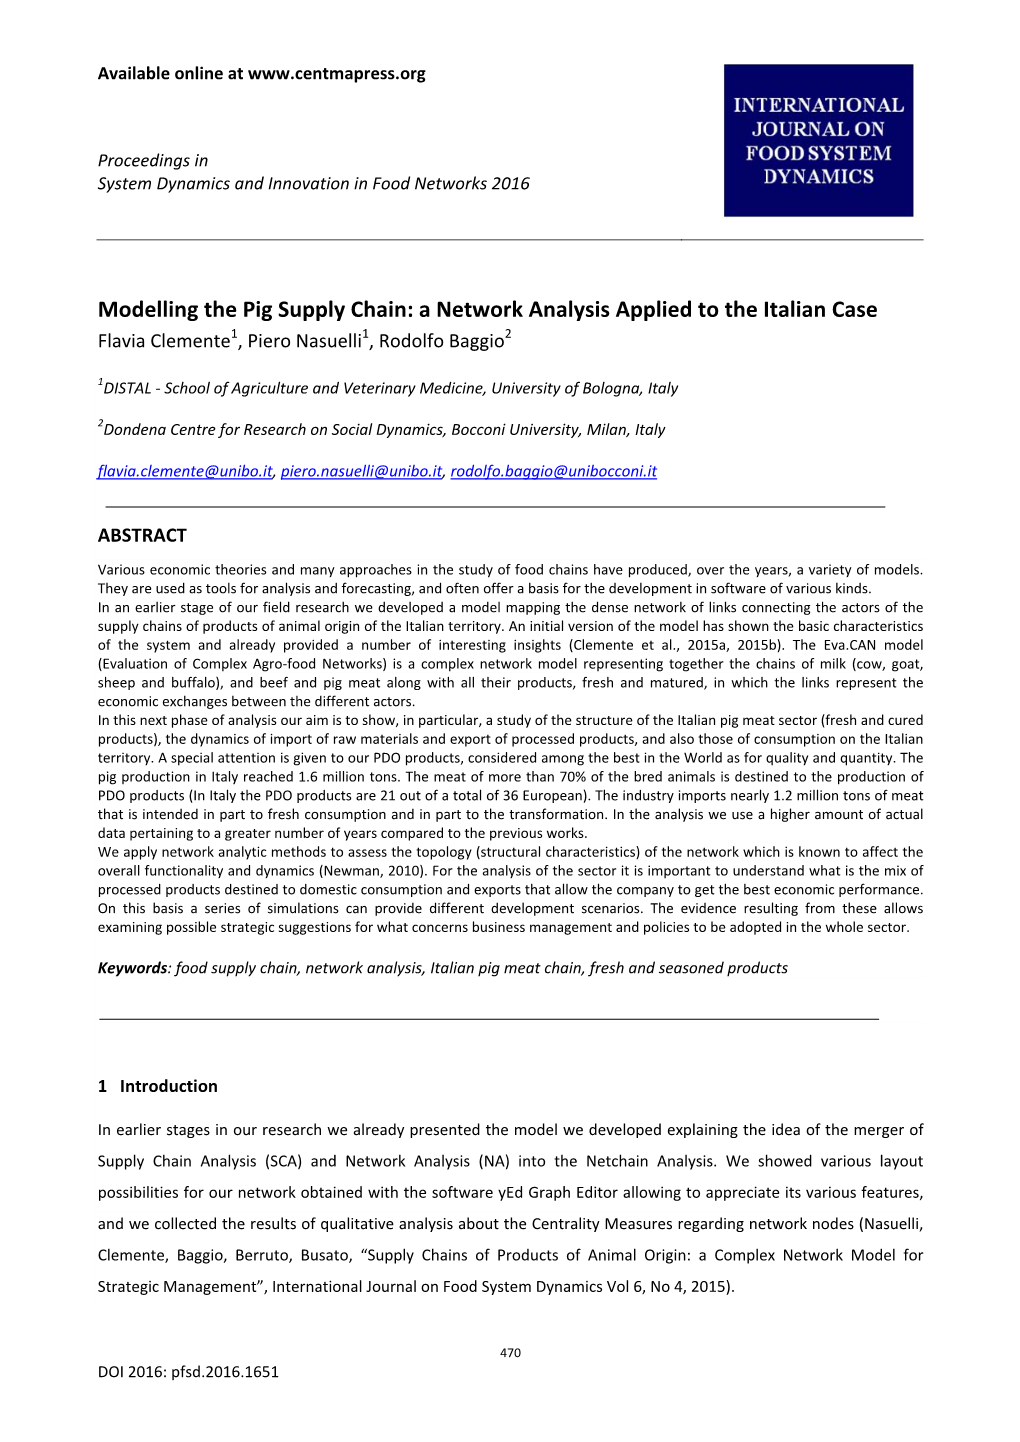 Modelling the Pig Supply Chain: a Network Analysis Applied to the Italian Case Flavia Clemente1, Piero Nasuelli1, Rodolfo Baggio2